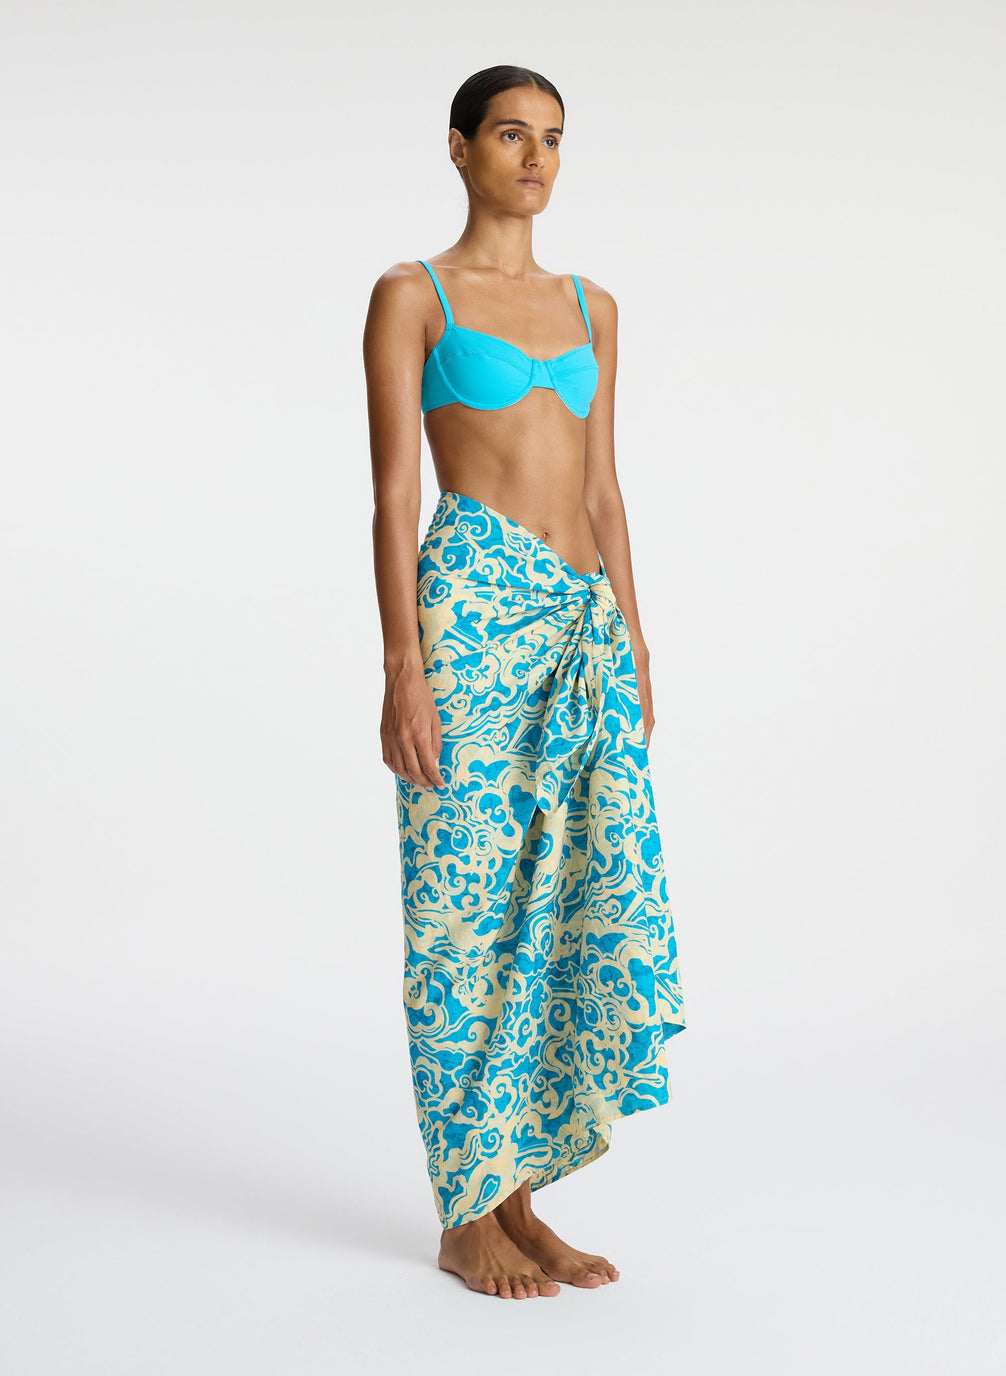 side view of woman wearing aqua bikini and aqua print sarong